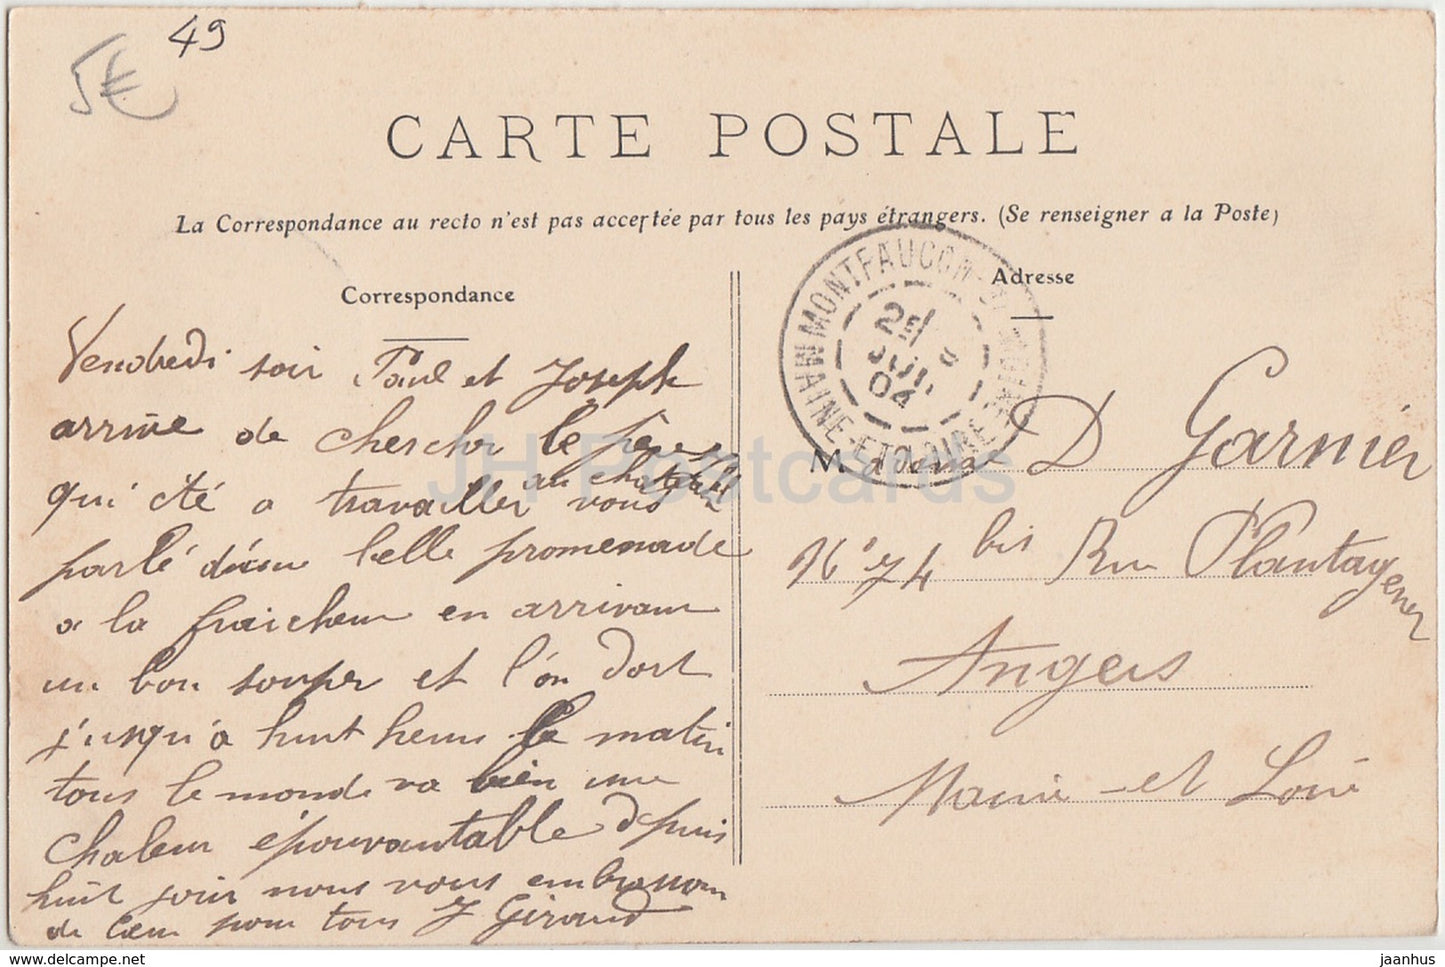 St Crespin - Chateau de la Septiere - castle - 54 - 1904 - old postcard - France - used